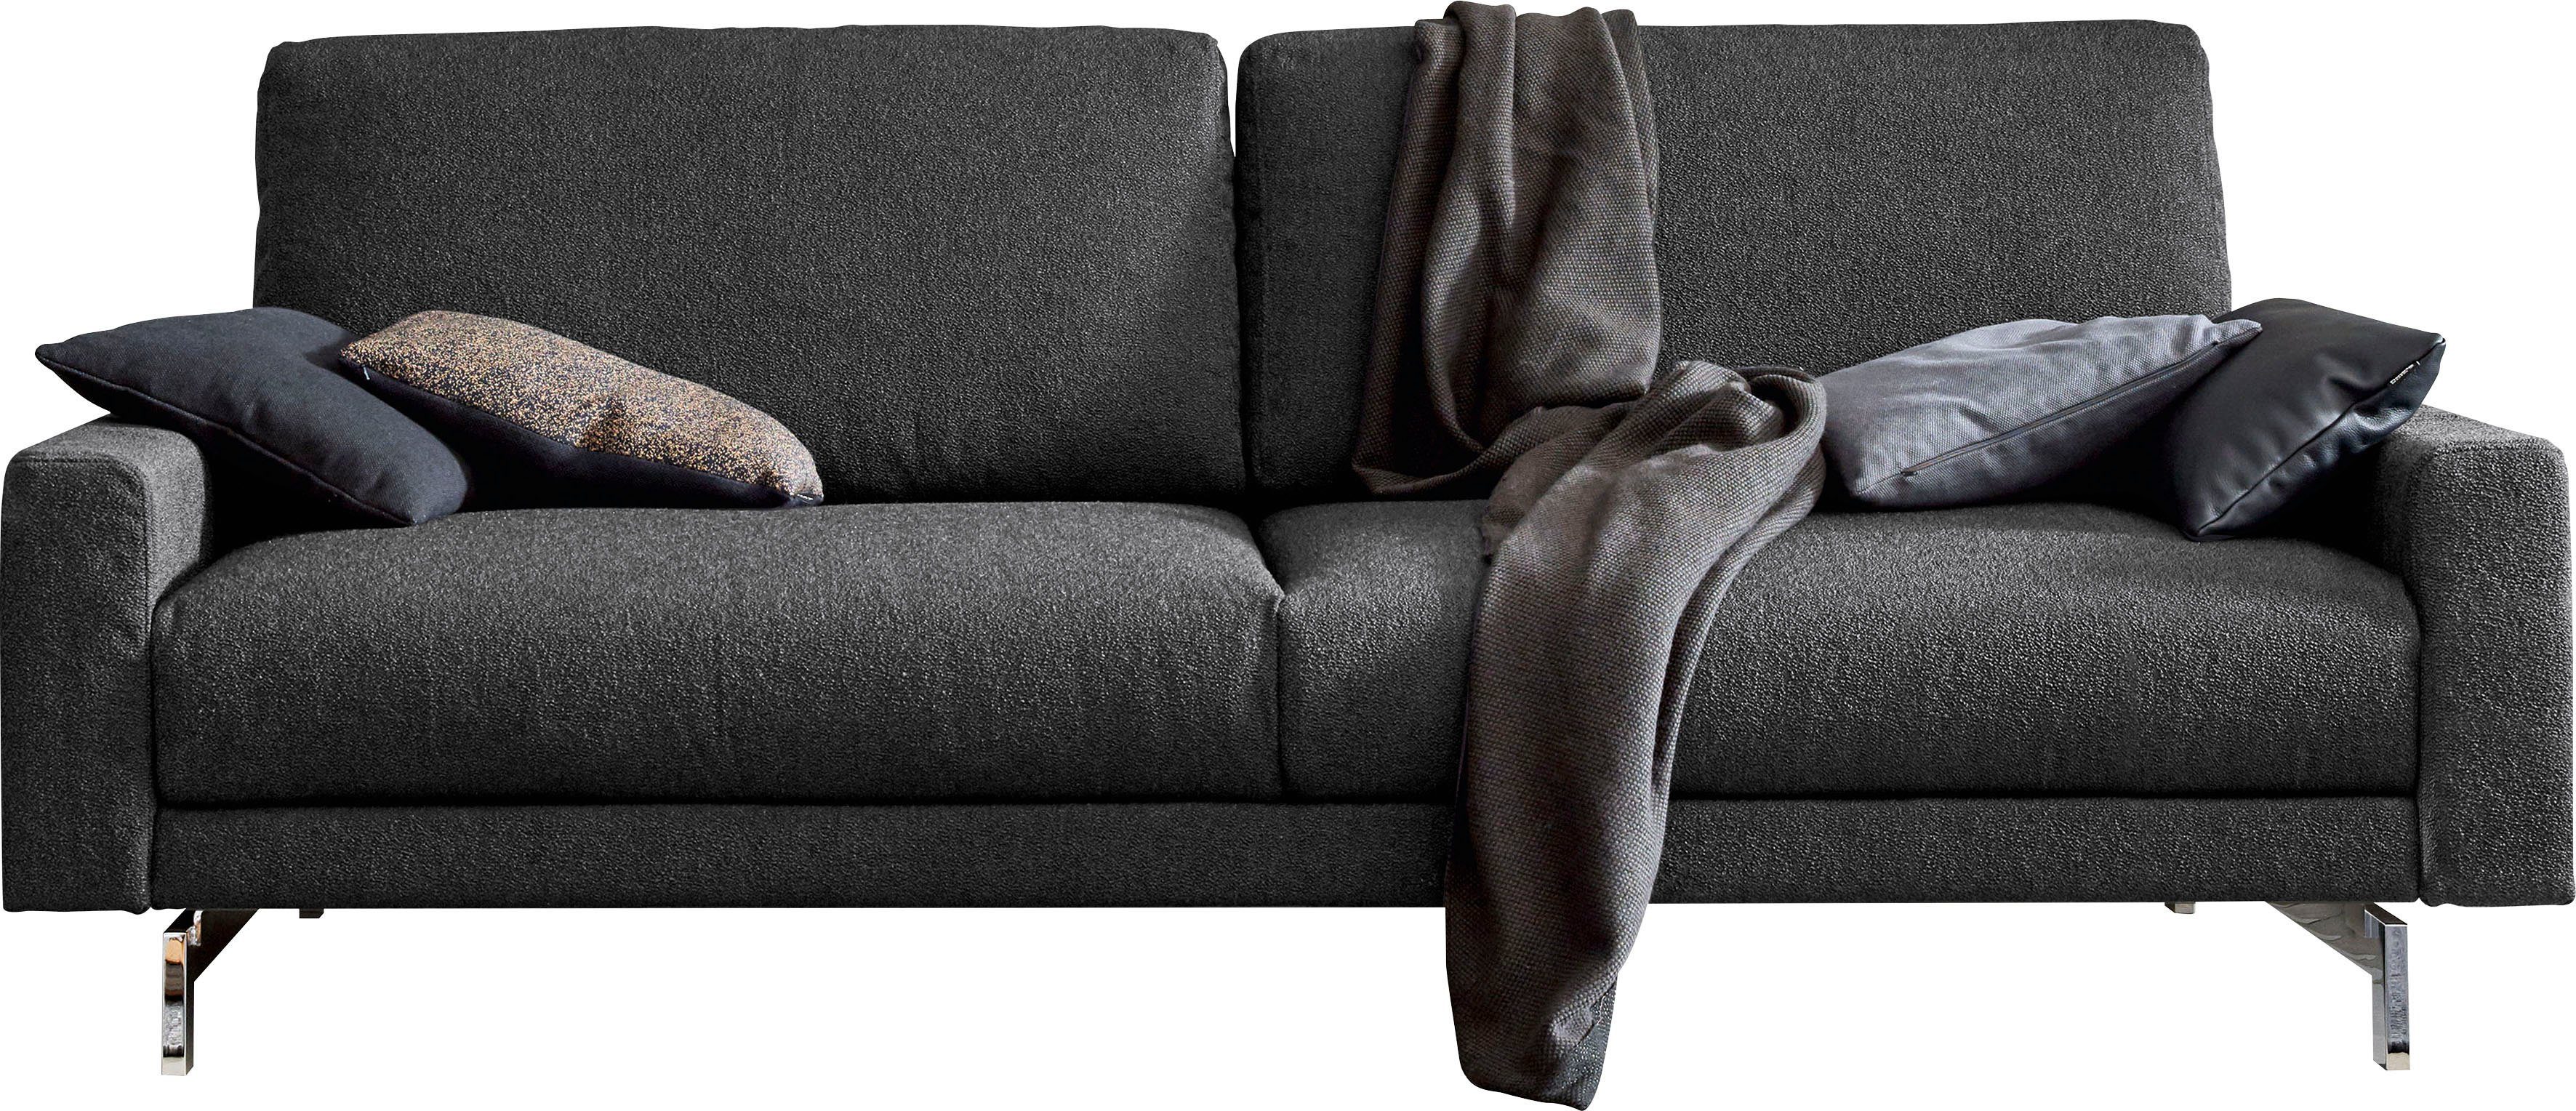 sofa Fuß Armlehne cm 204 hs.450, hülsta niedrig, chromfarben 3-Sitzer glänzend, Breite